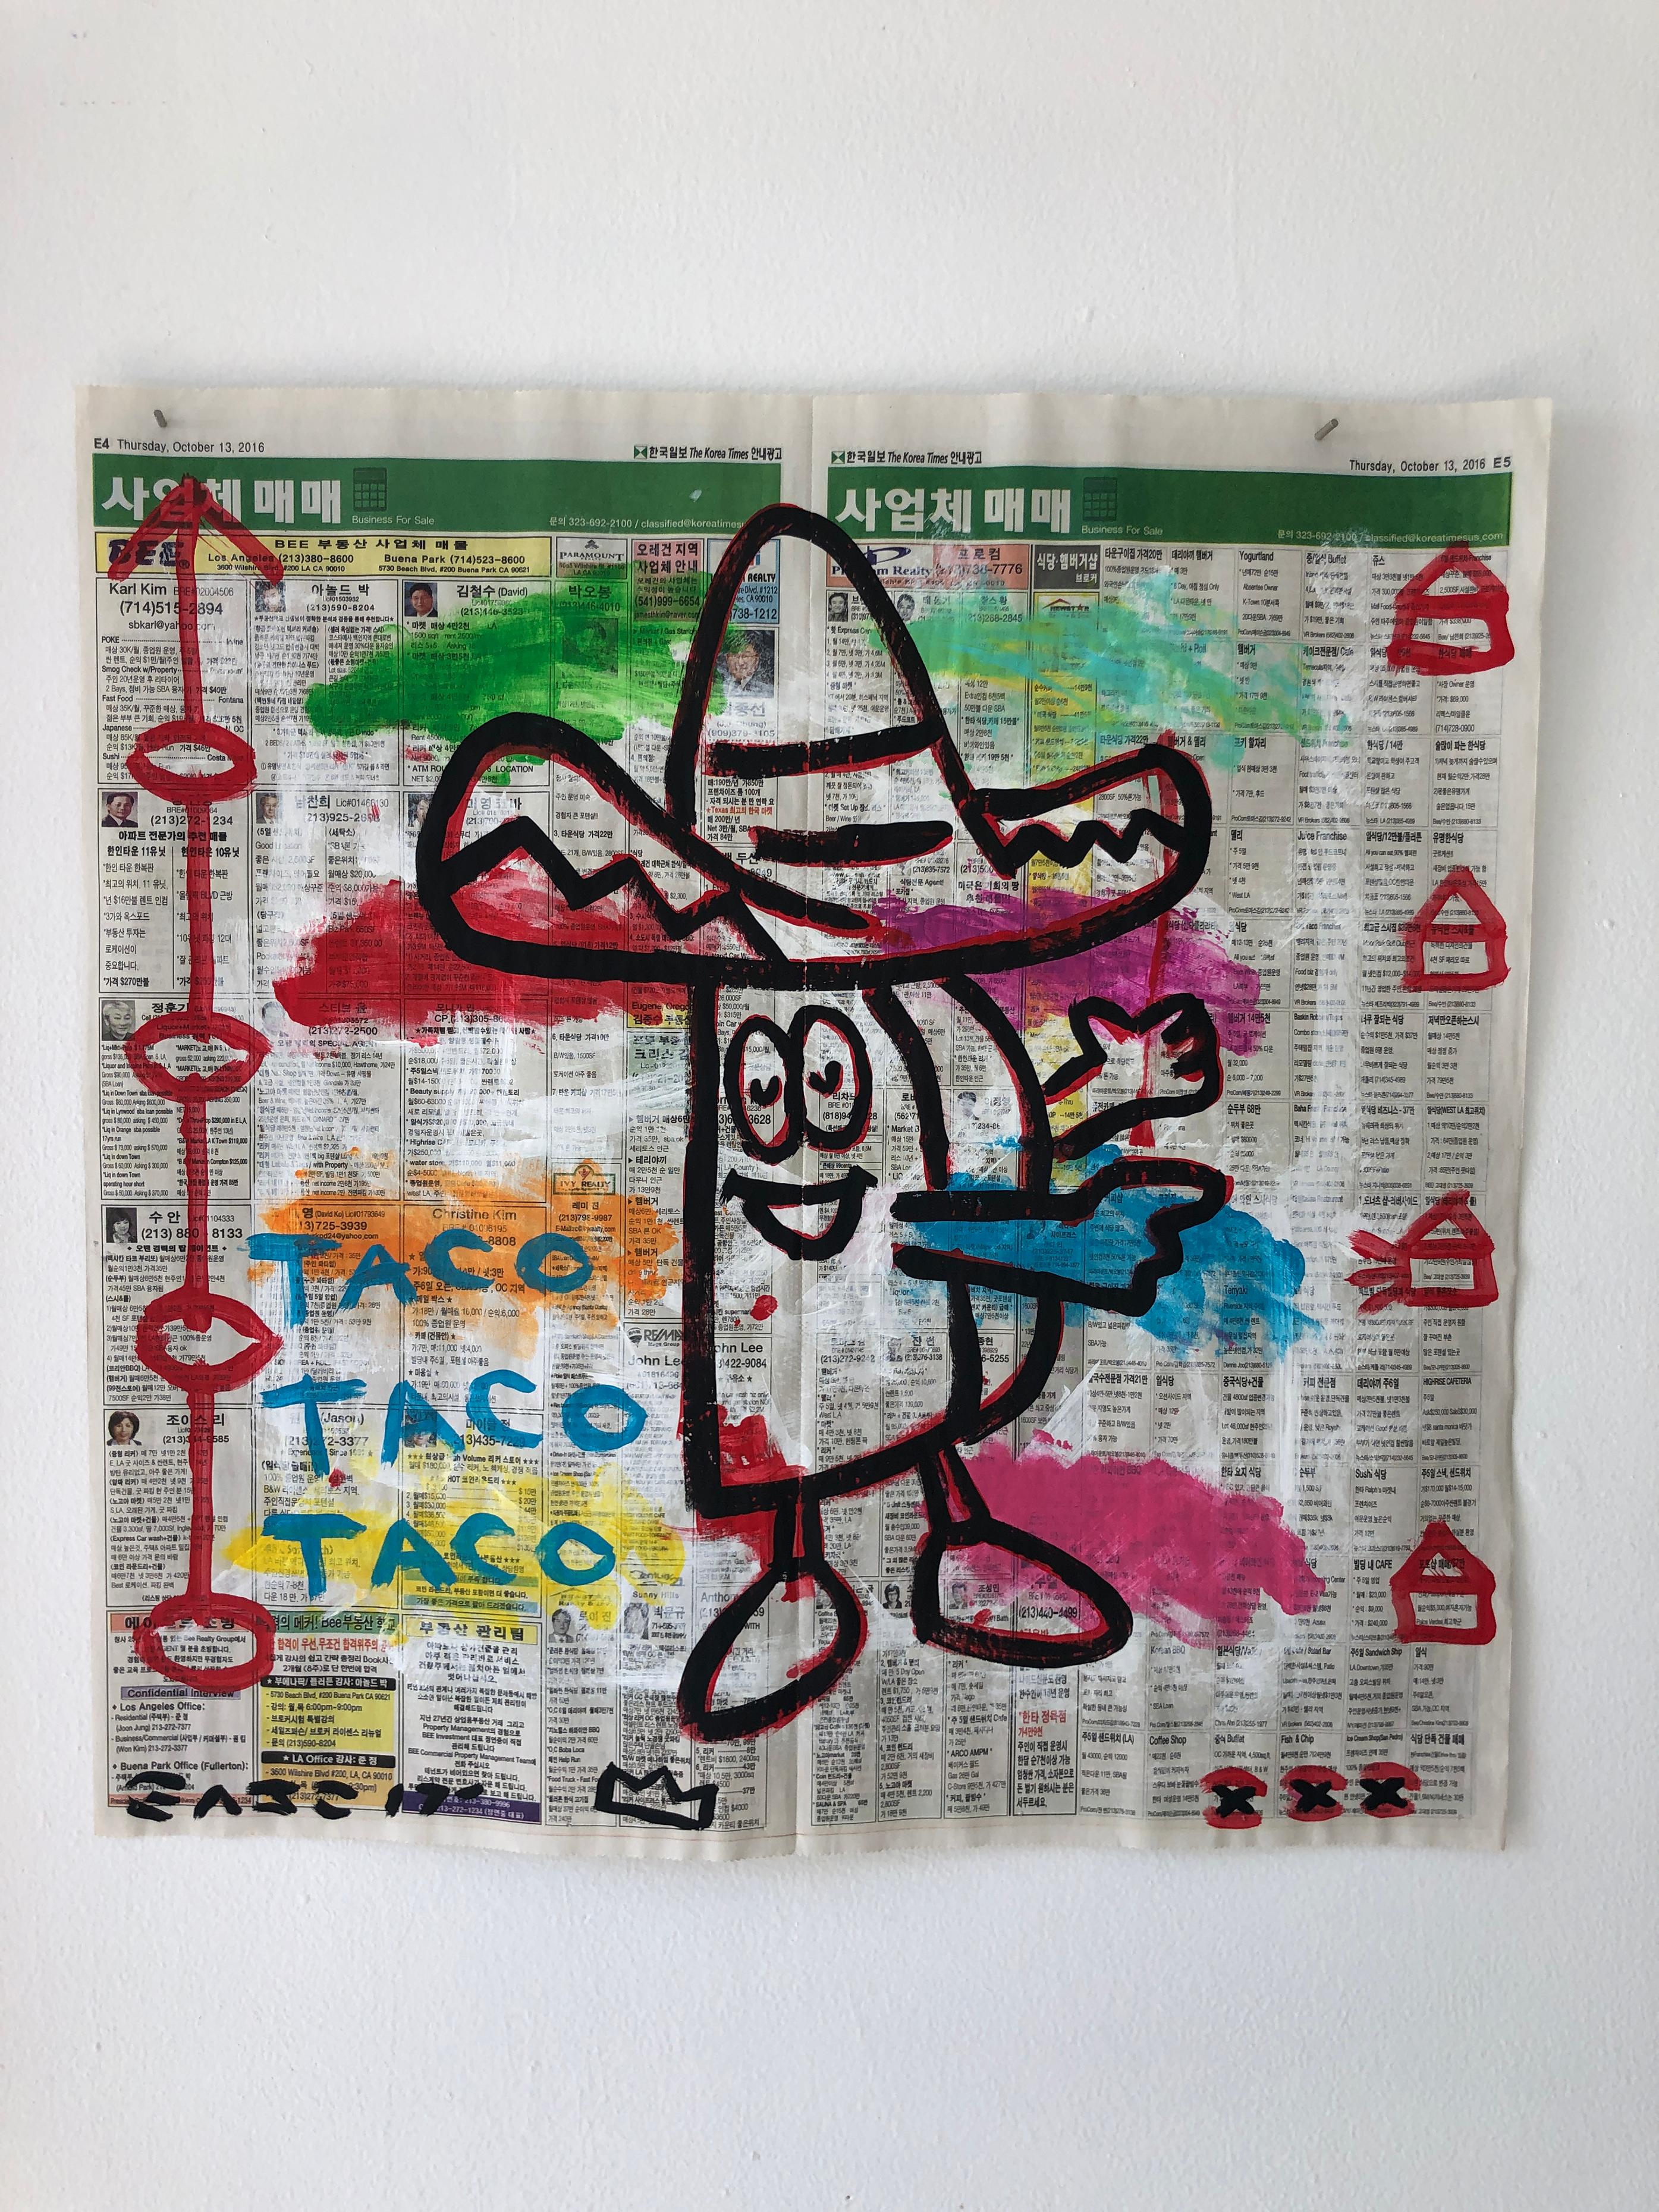 Gary John Figurative Print - "Taco" Acrylic and Collage on Korean newsprint